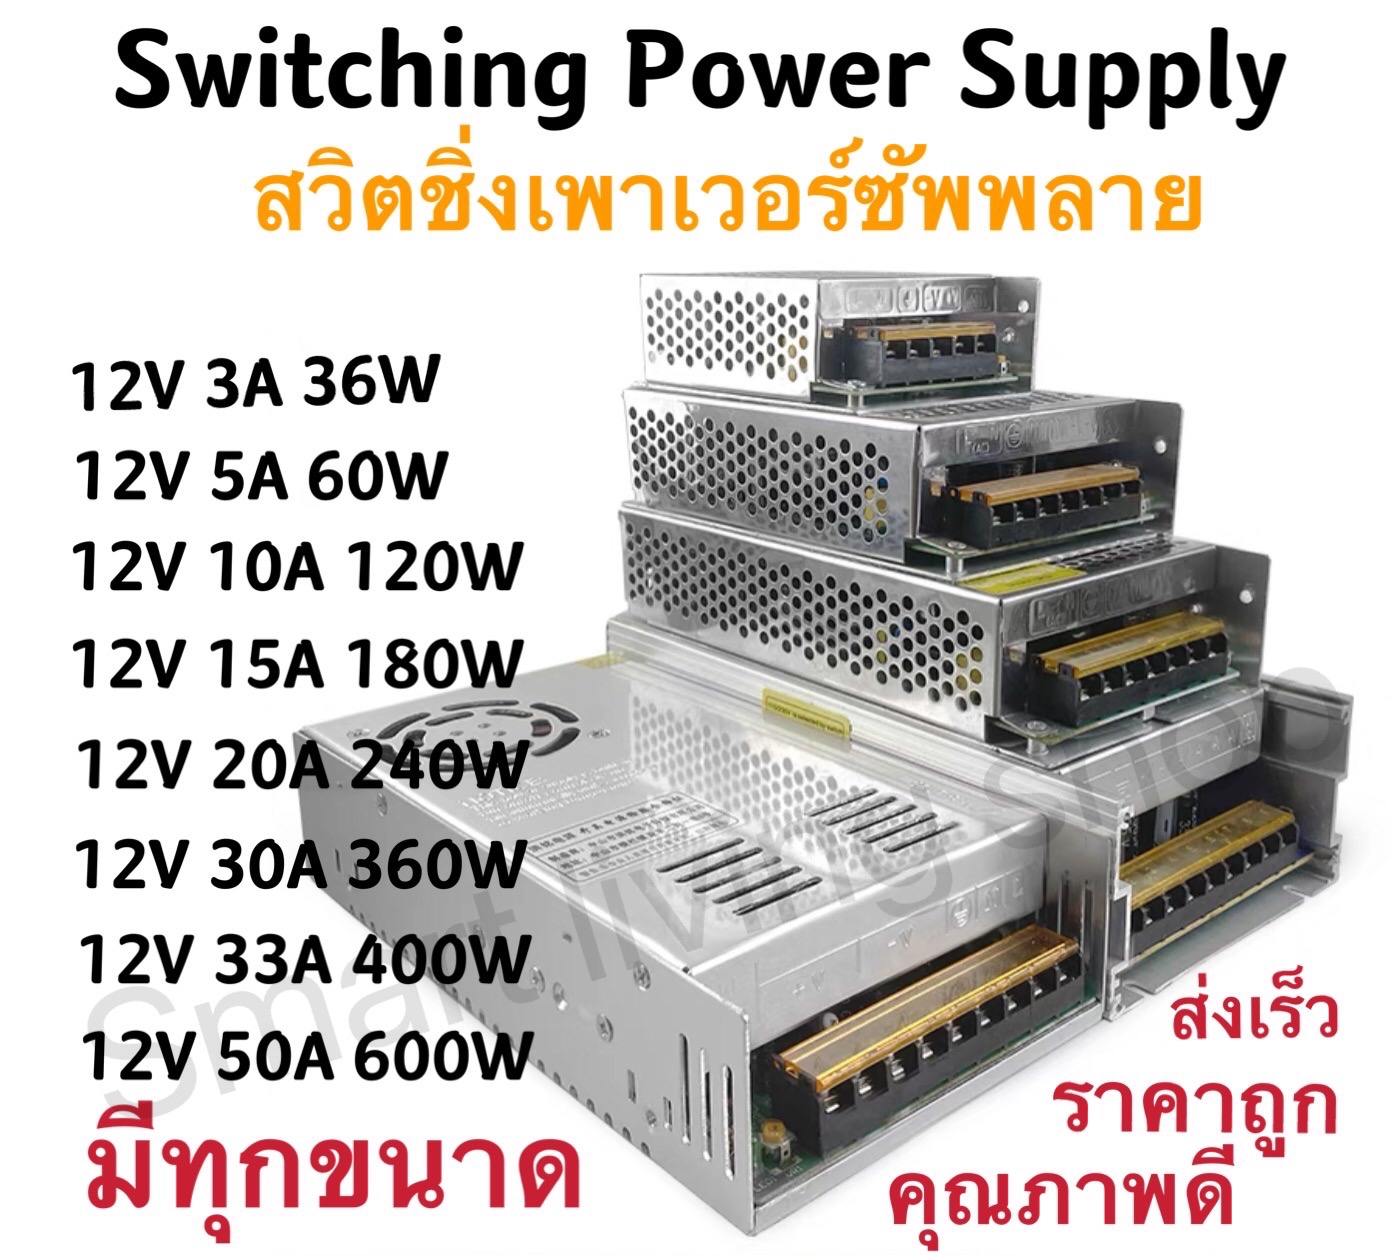 Switching Power Supply สวิตชิ่งเพาเวอร์ซัพพลาย 12v=3A/36w,5A/60w,10A/120w,15A/180w,20A/240w,30A/360w,33A/400W,50A/600W สวิทชิ่งเพาเวอร์ซัพพลาย หม้อแปลงไฟฟ้า